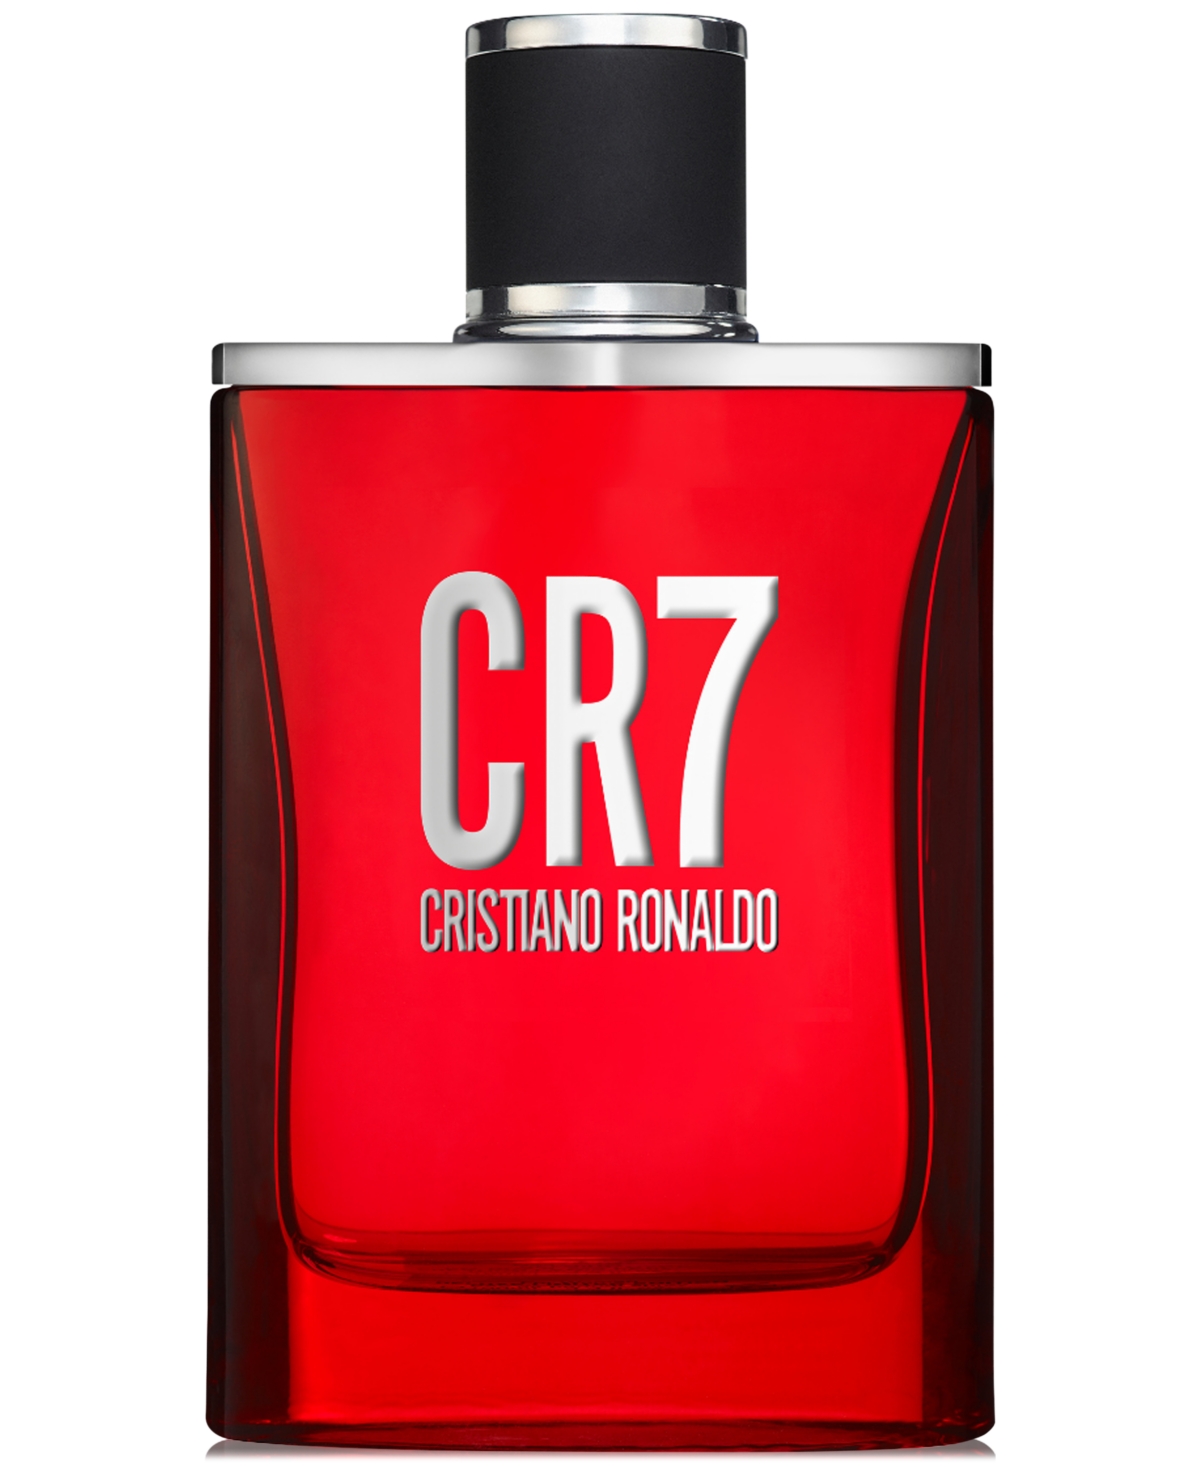 Cr7 Cristiano Ronaldo Men's Eau De Toilette Spray, 1 Oz.